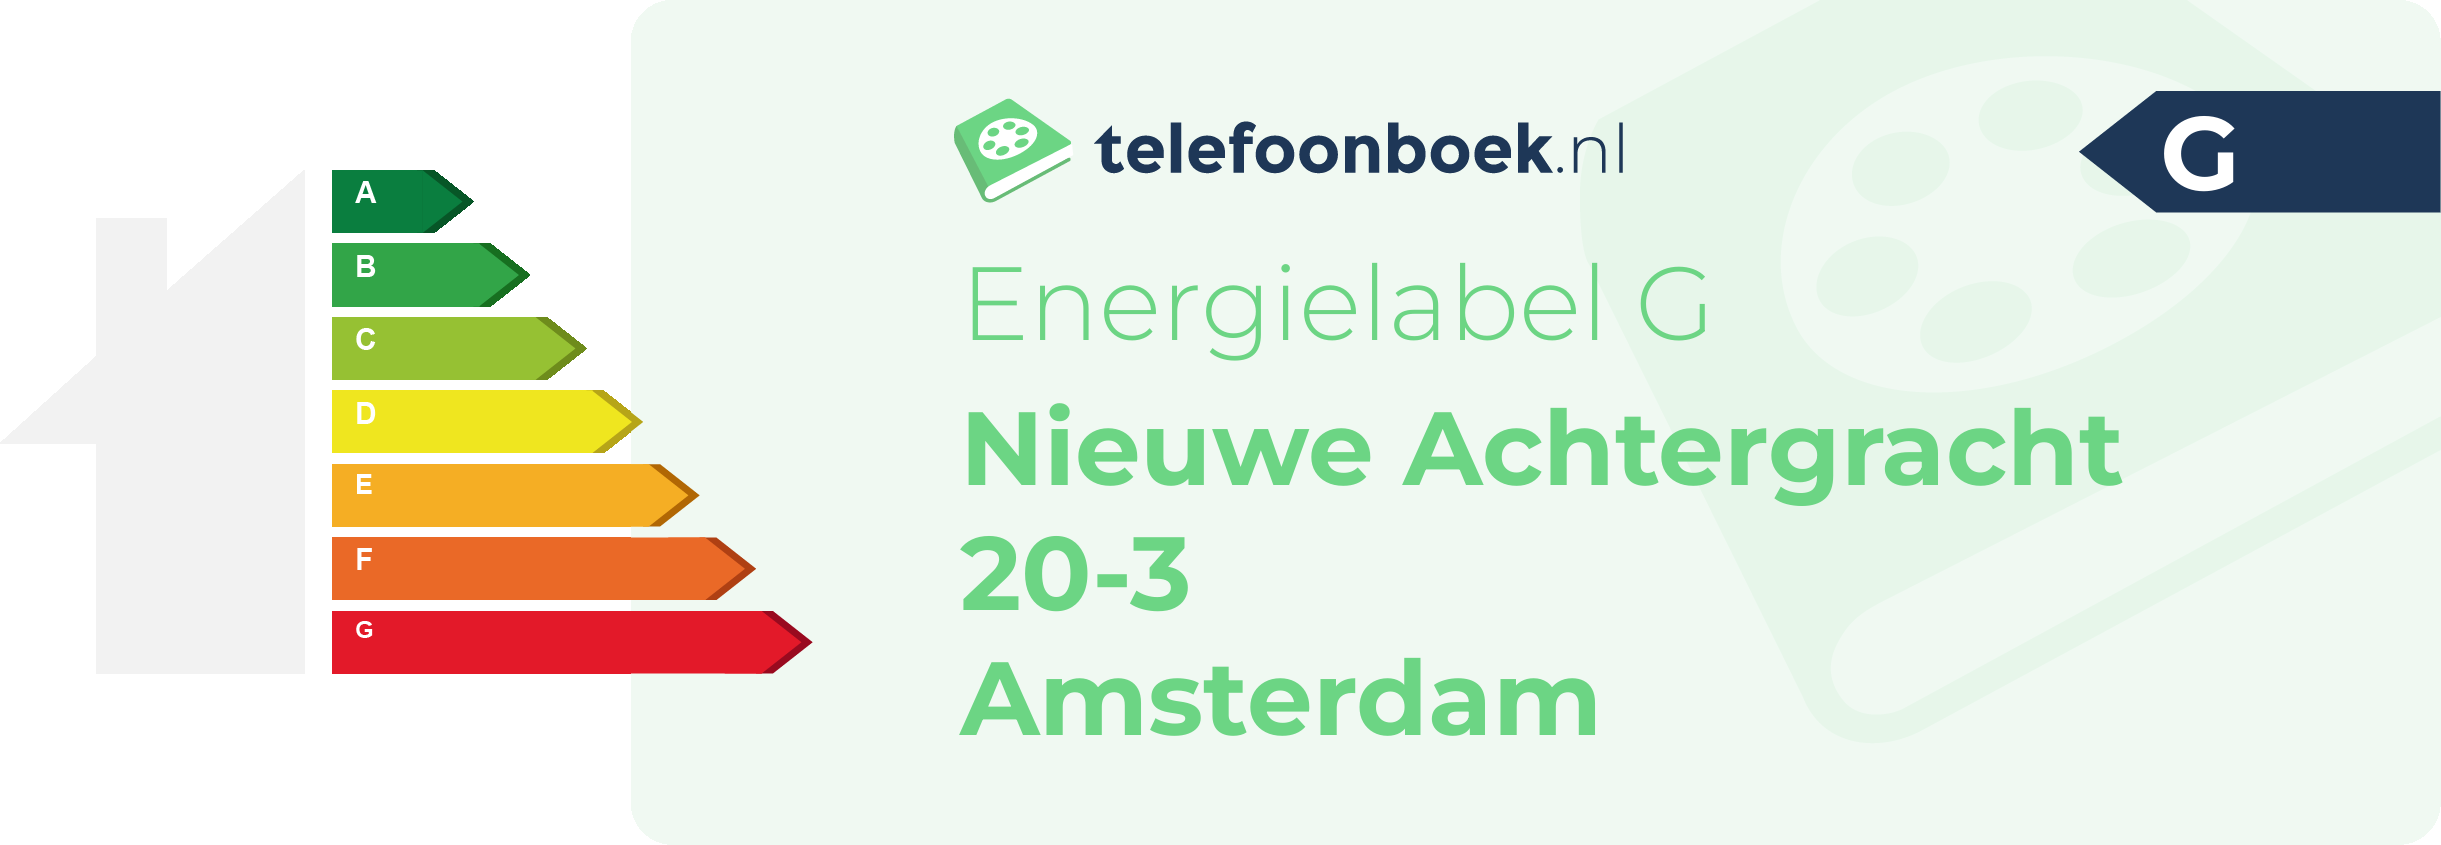 Energielabel Nieuwe Achtergracht 20-3 Amsterdam